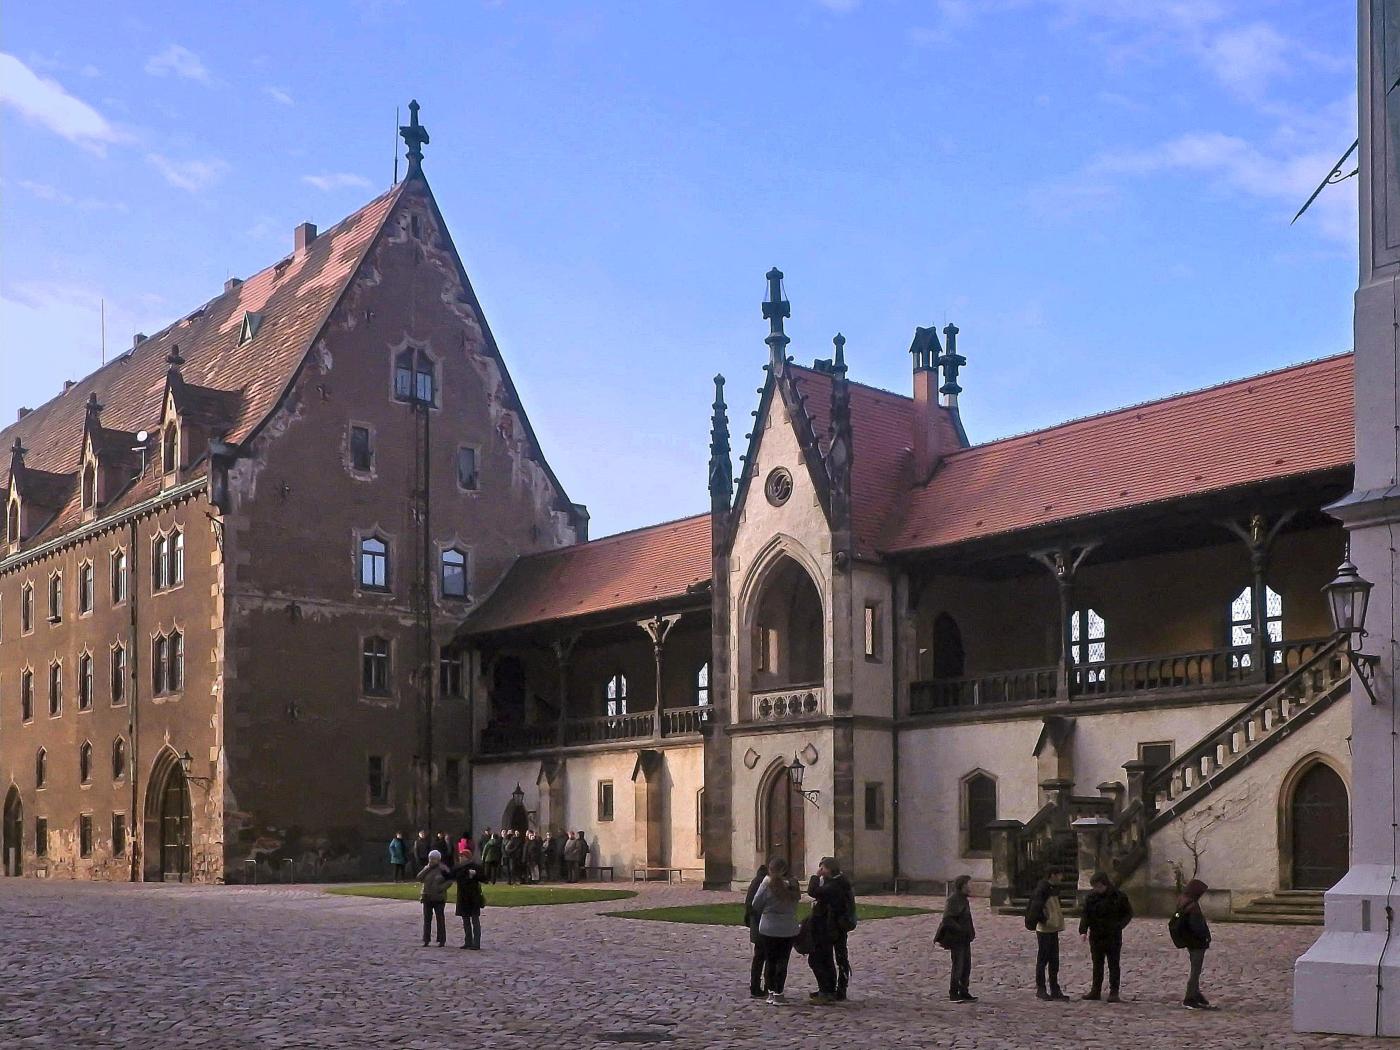 Kornhaus mit Verbindungsgang zur Burg